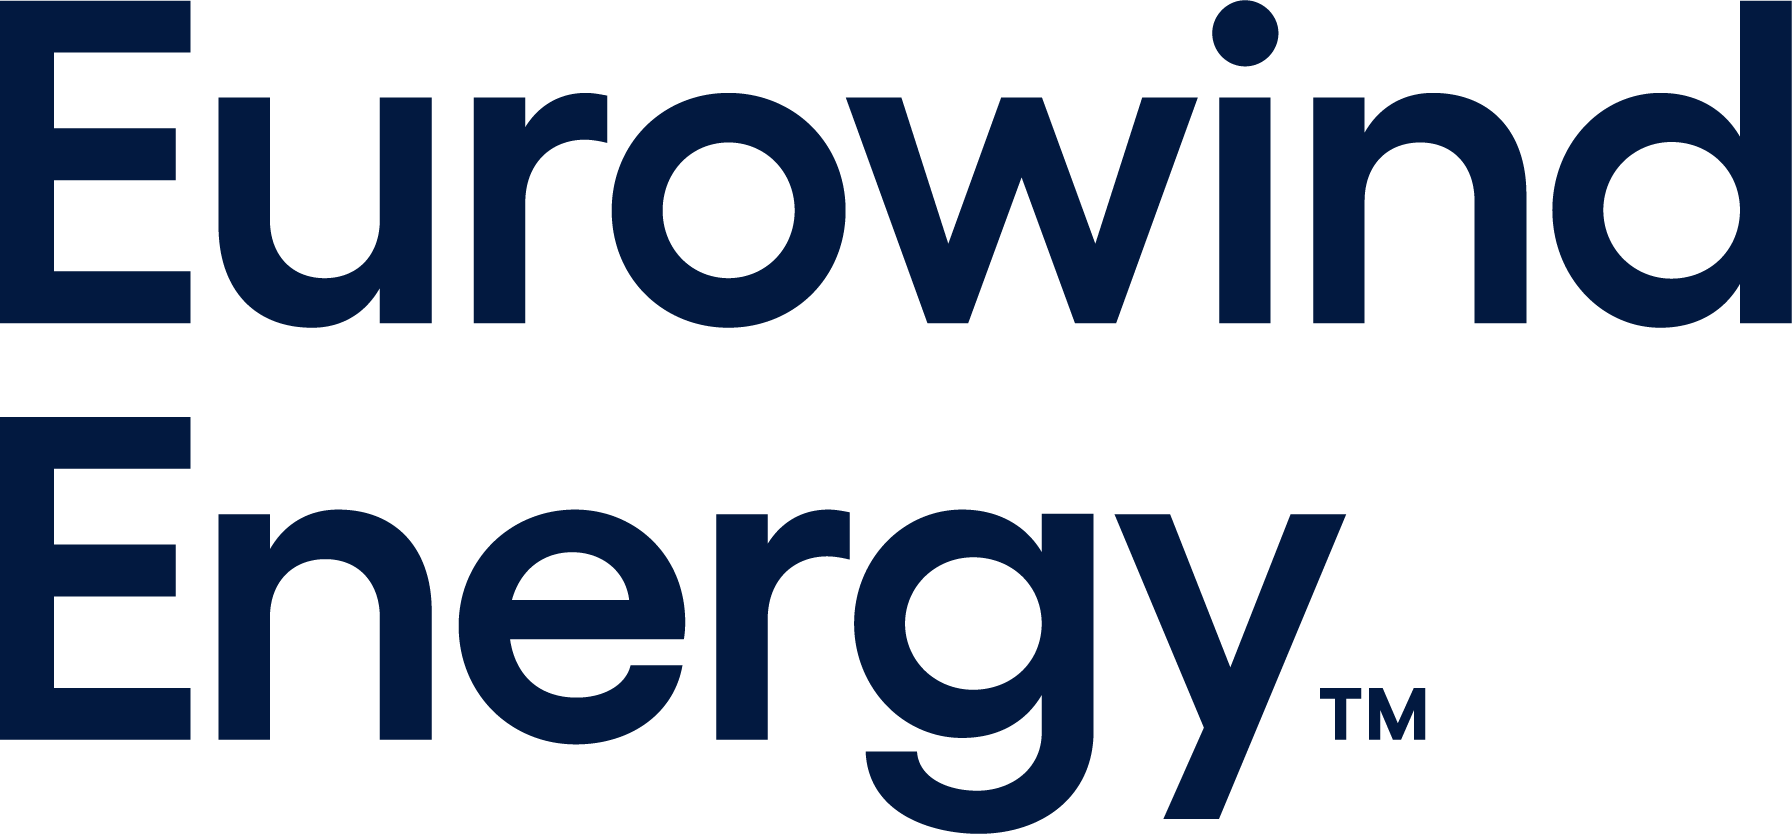 Eurowind Energy logo png.png